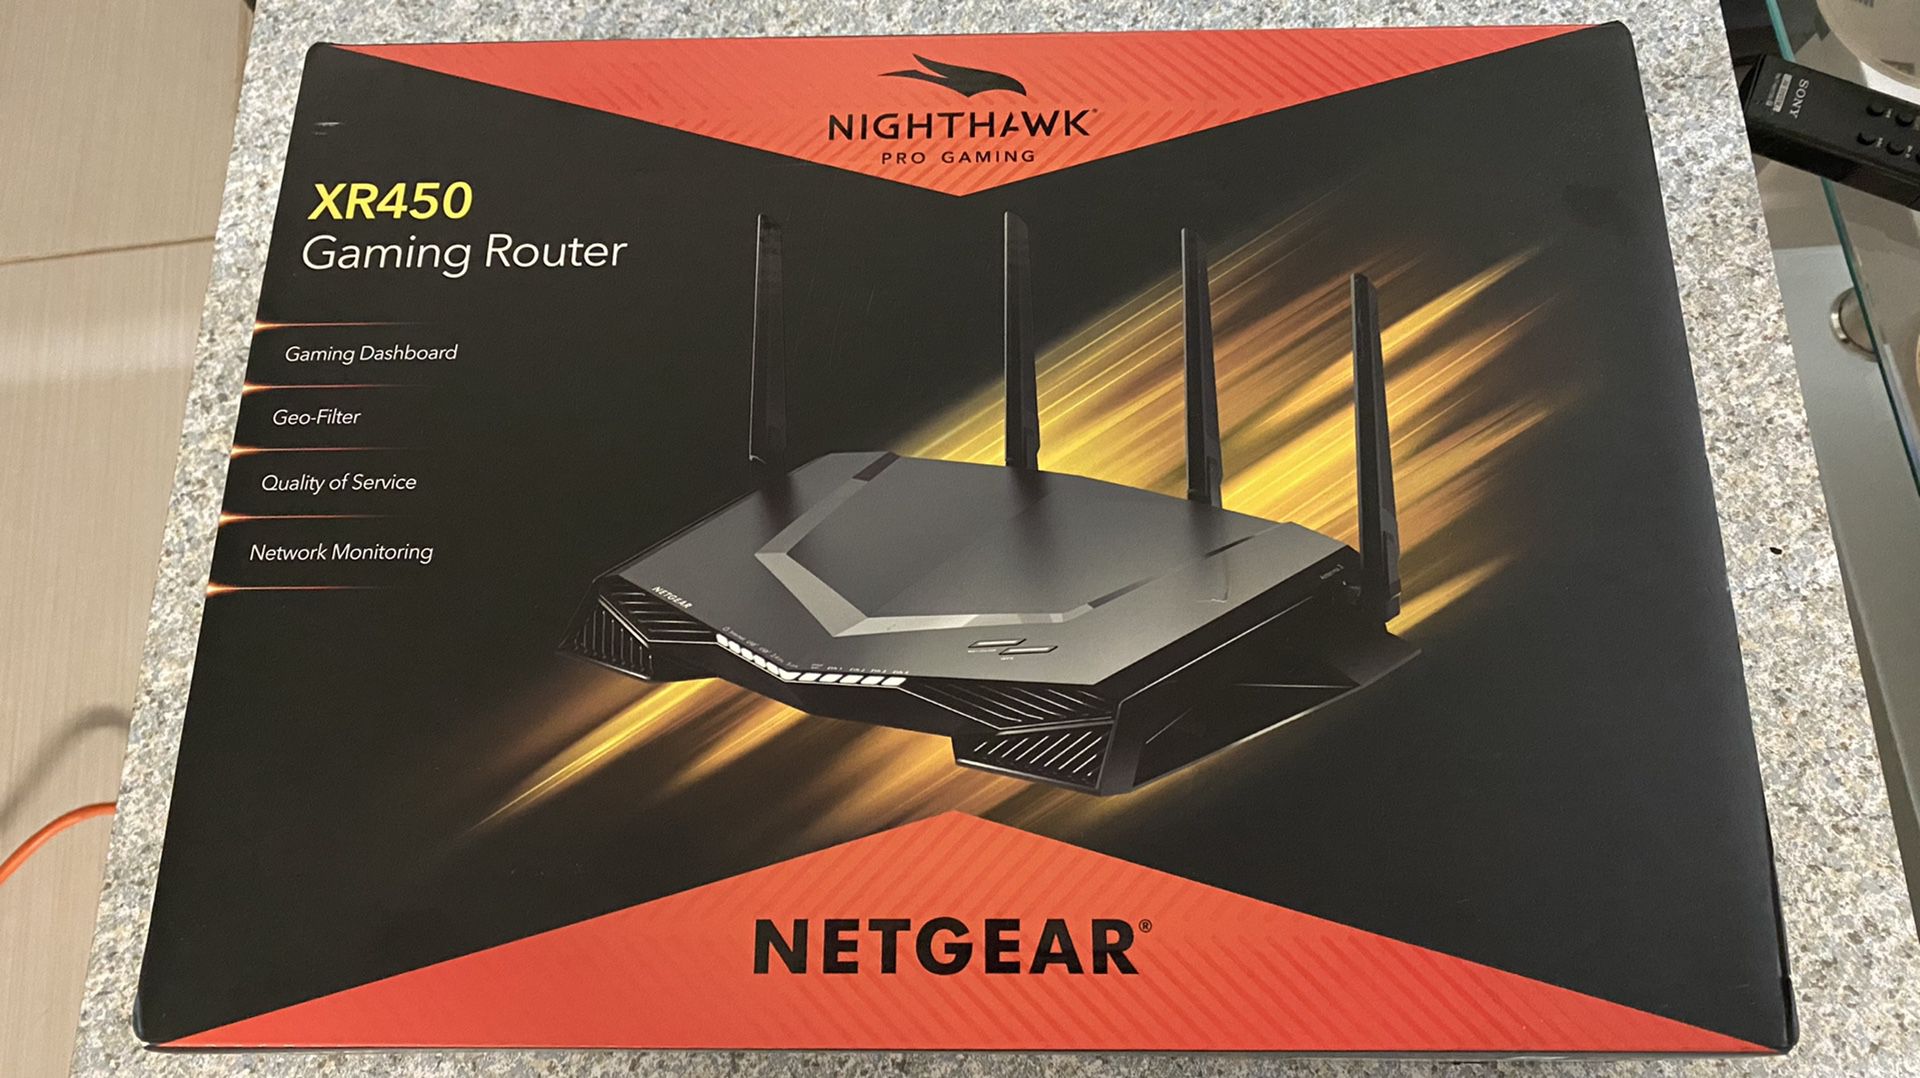 Netgear nighthawk XR450 gaming router